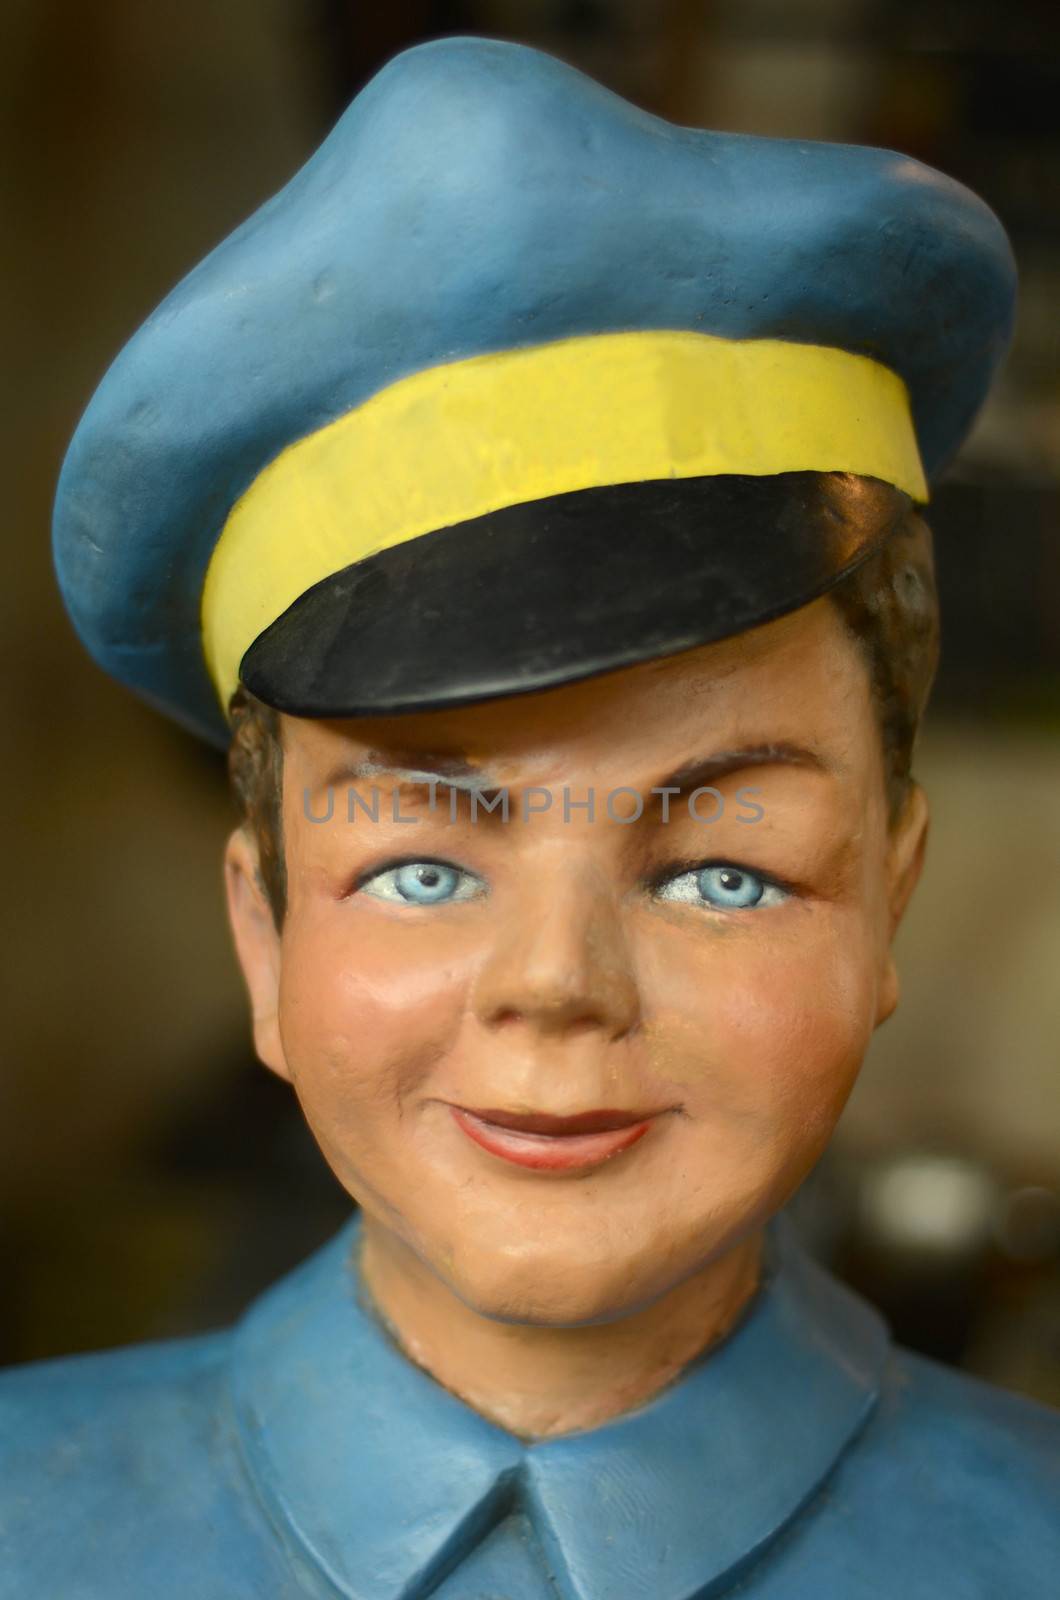 Vintage Mannequin Of A Boy Or Man In A Blue Uniform